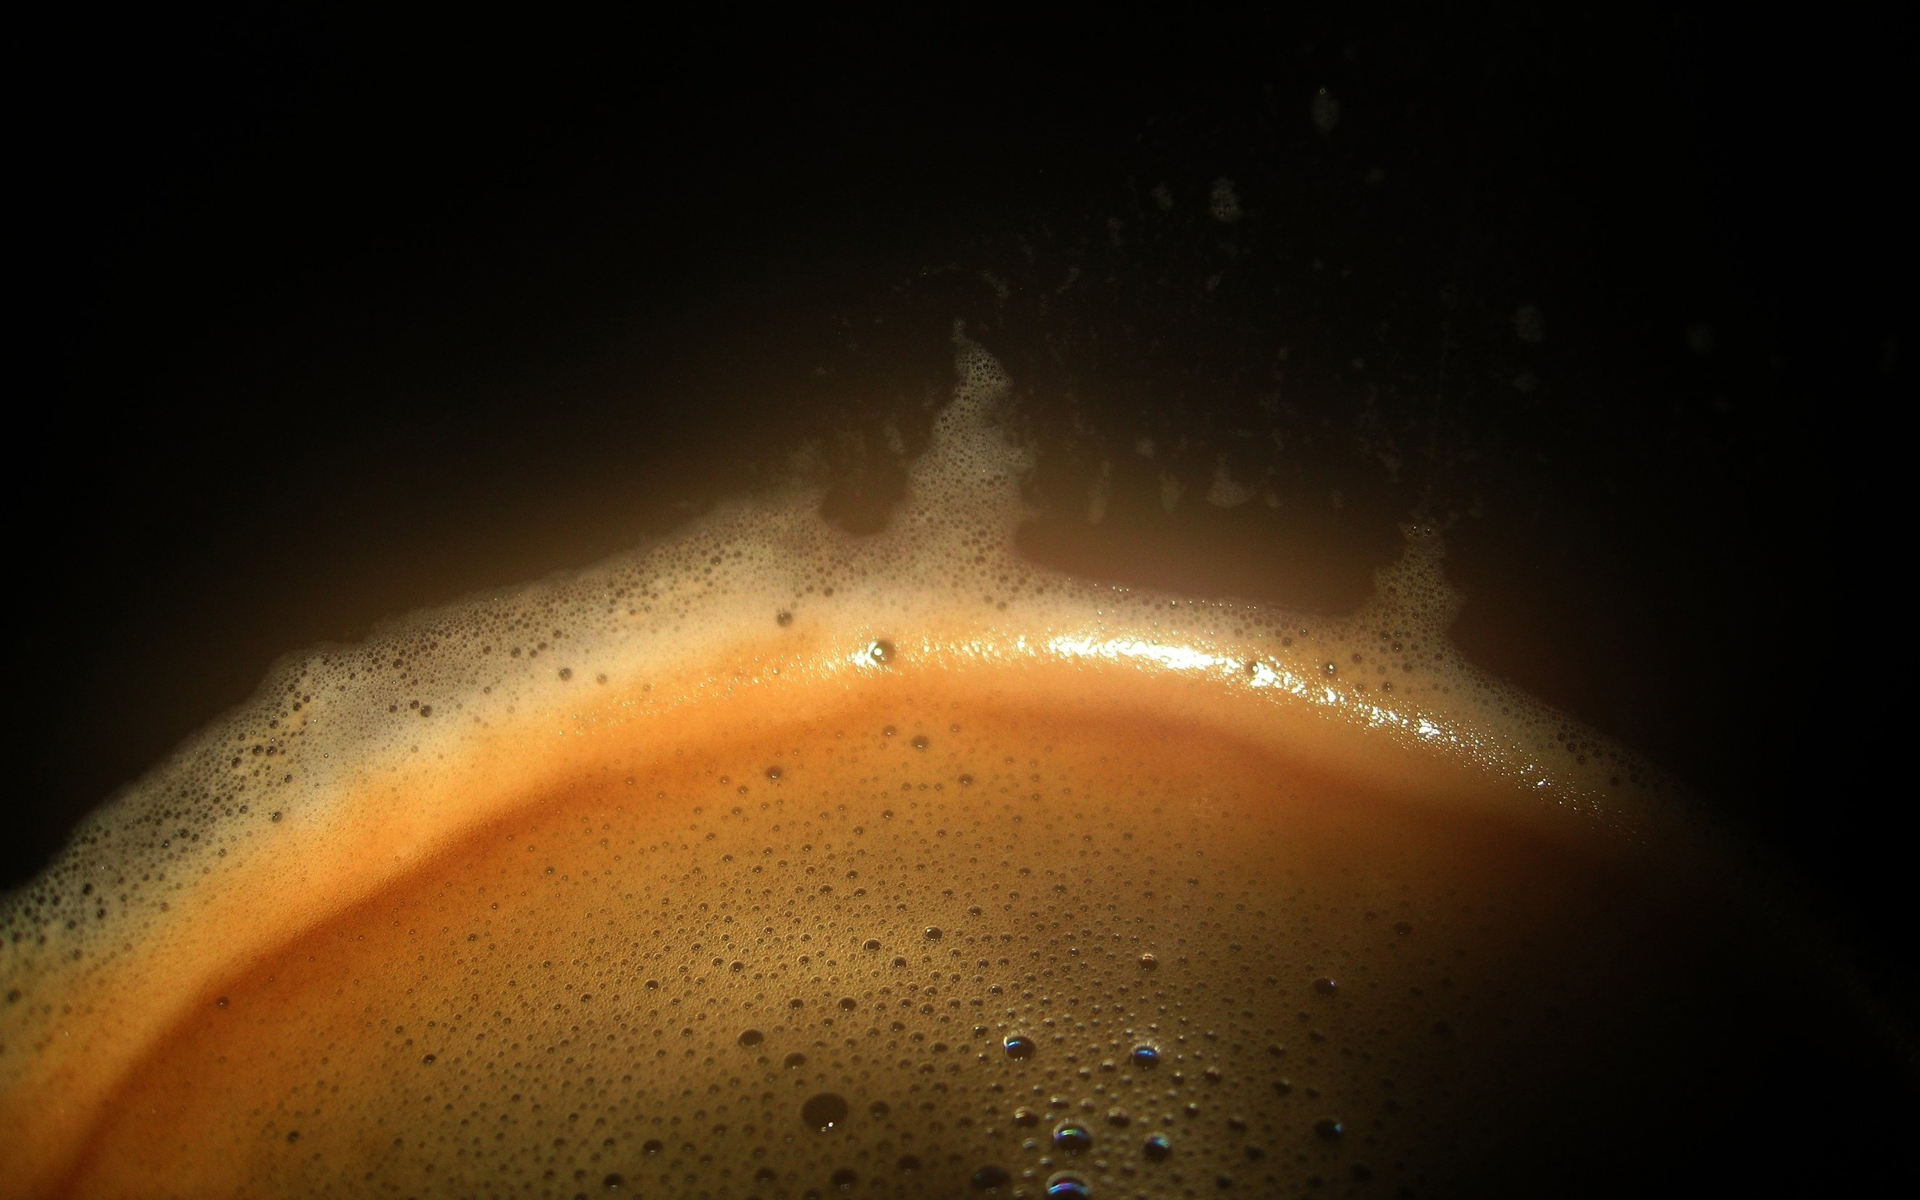 Пенка кофе текстура